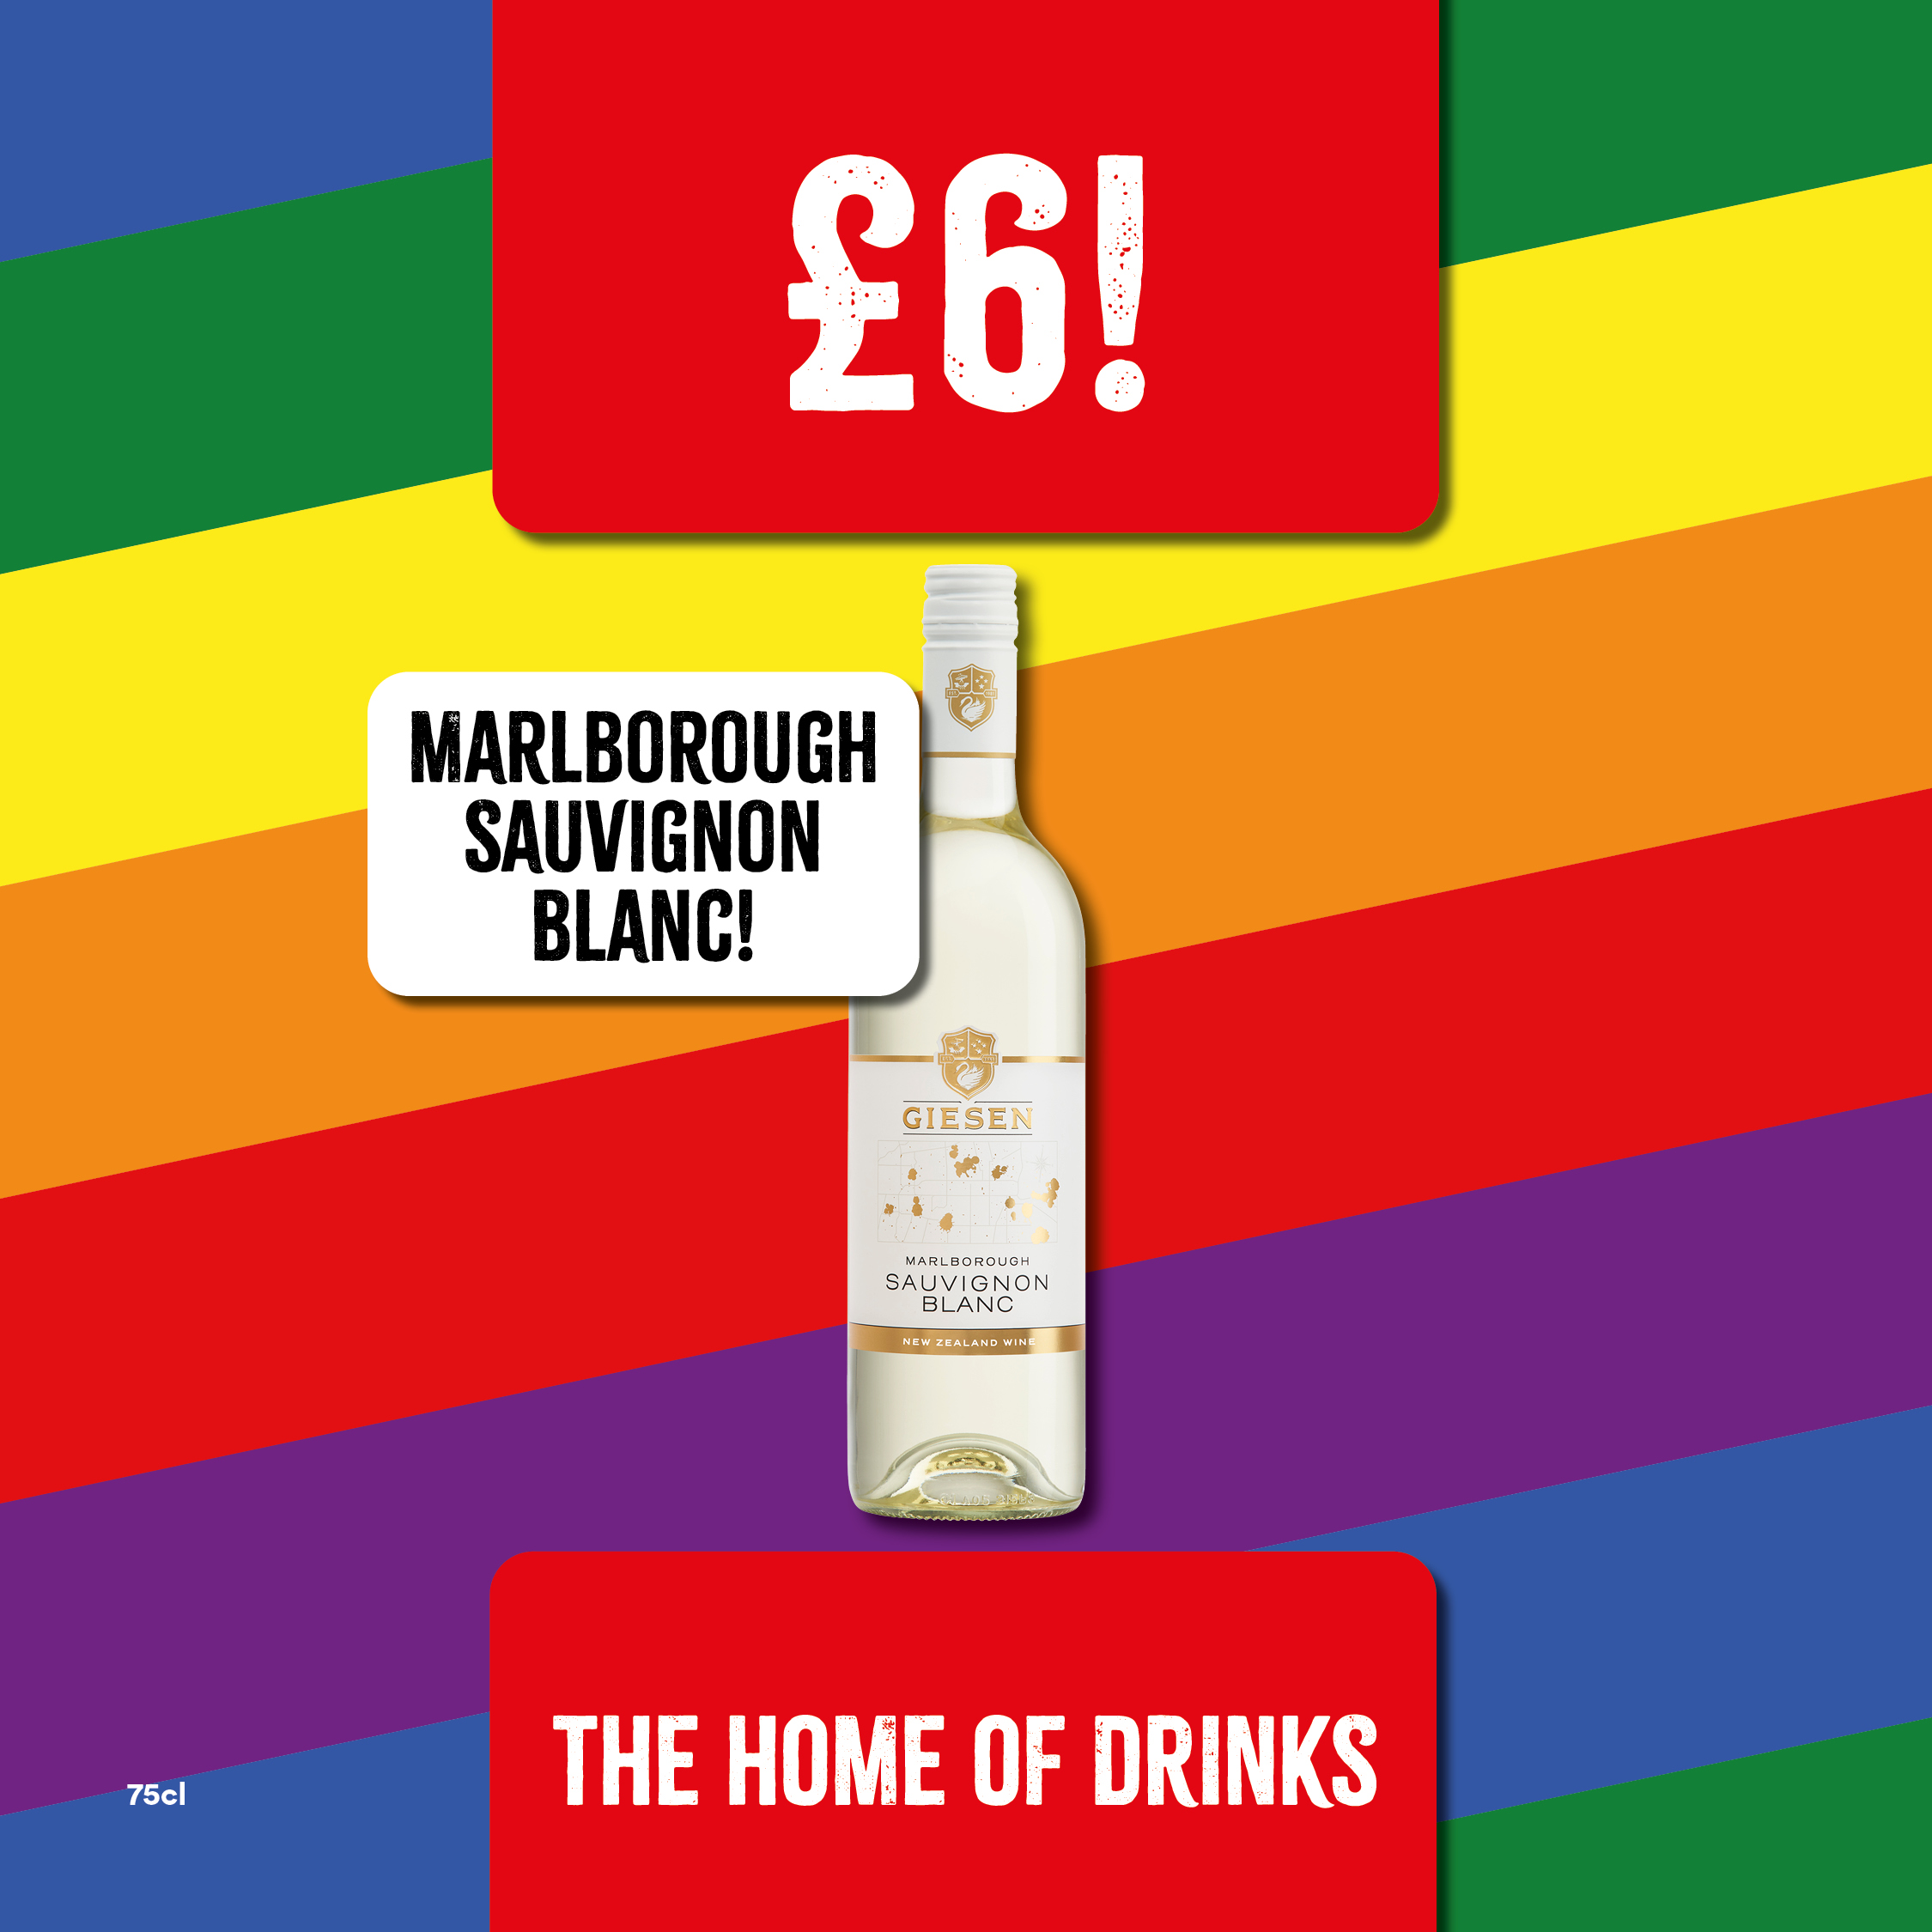 Only £6 Marlborough Sauvignon Blanc Bargain Booze Select Convenience Bolton 01204 692626